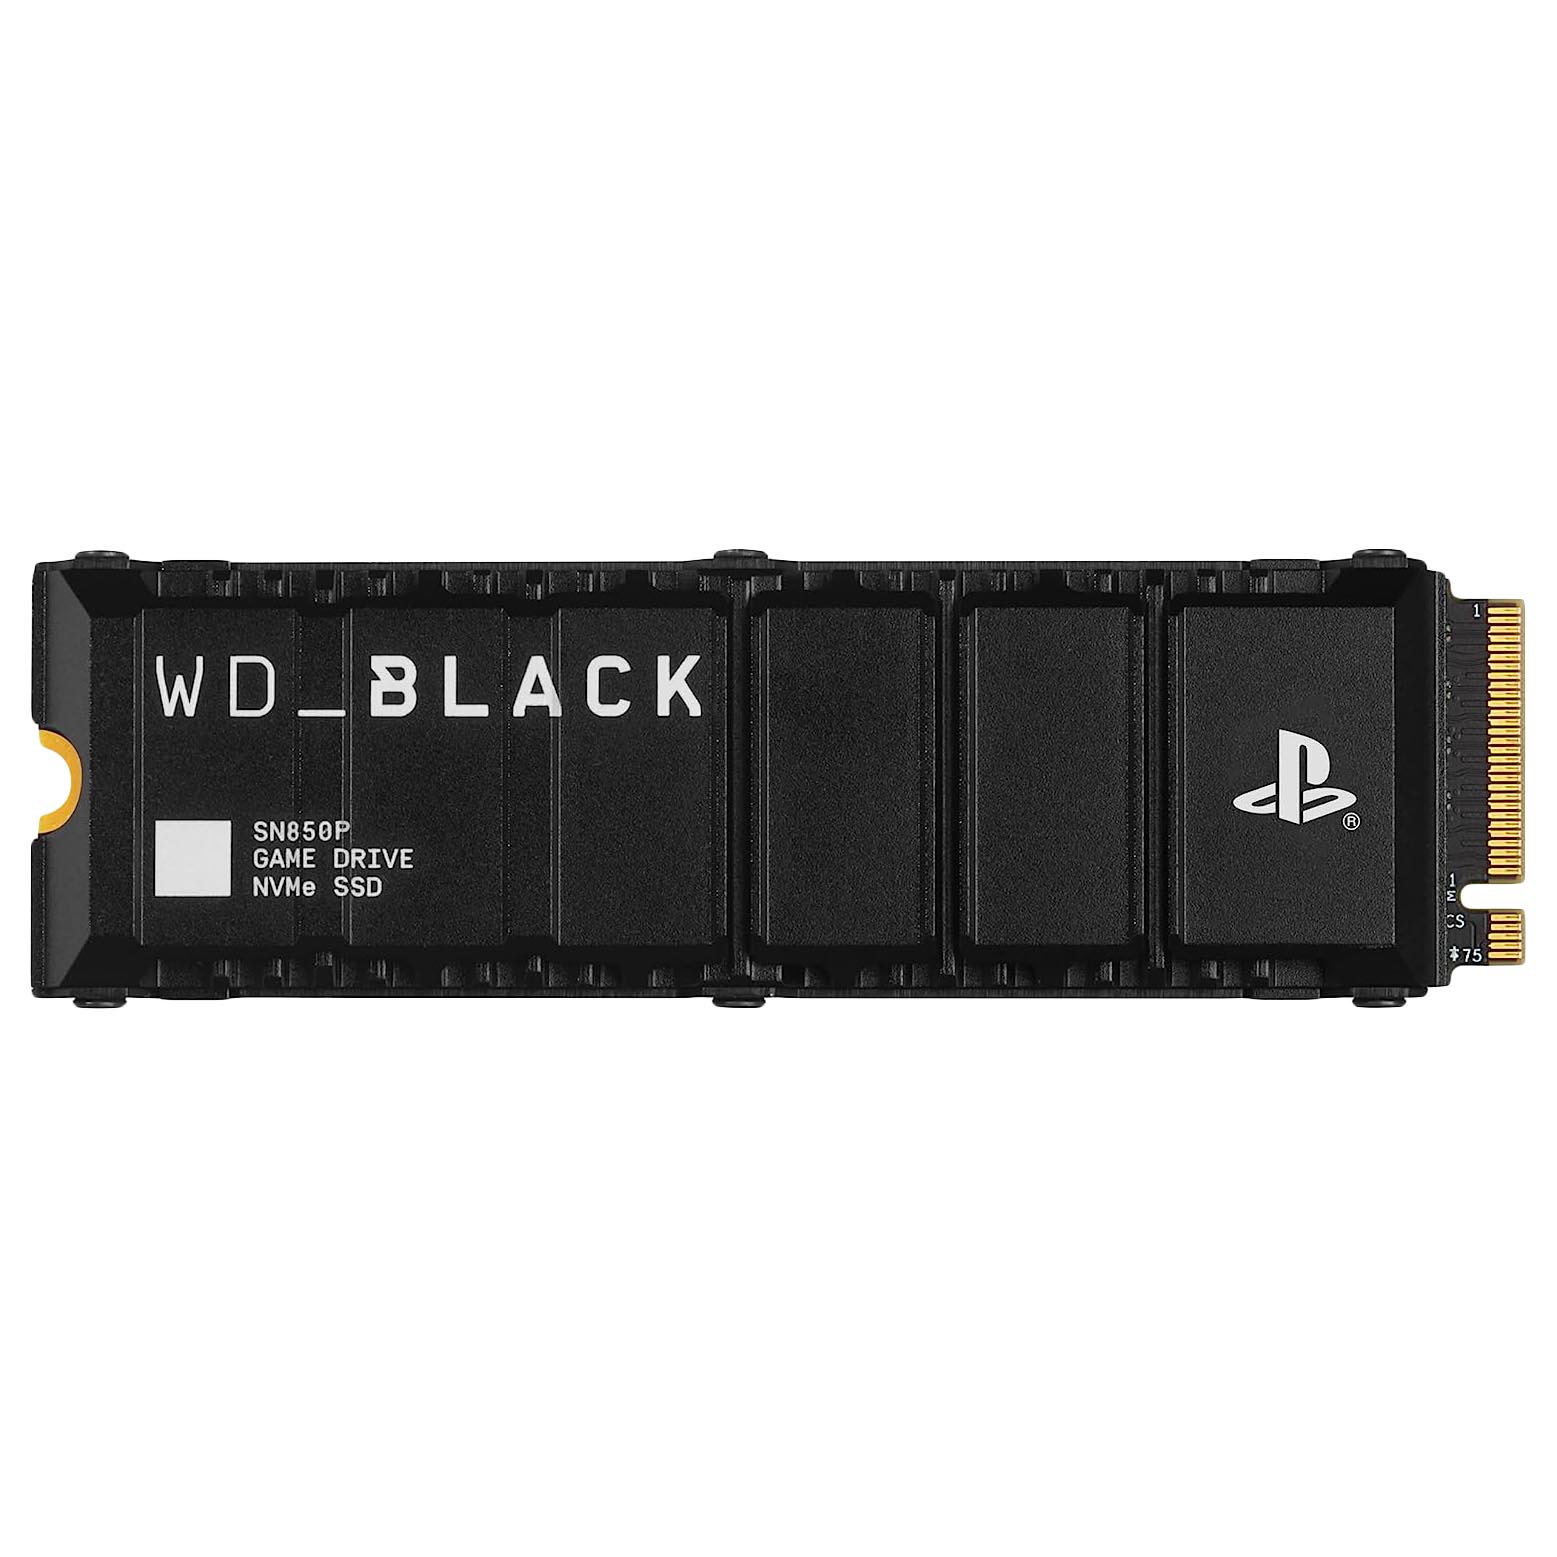 Внутренний твердотельный накопитель Western Digital WD Black SN850P PS5, WDBBYV0010BNC-CRSN, 1Тб, M.2 2280 адаптер playstation camera vr для ps5